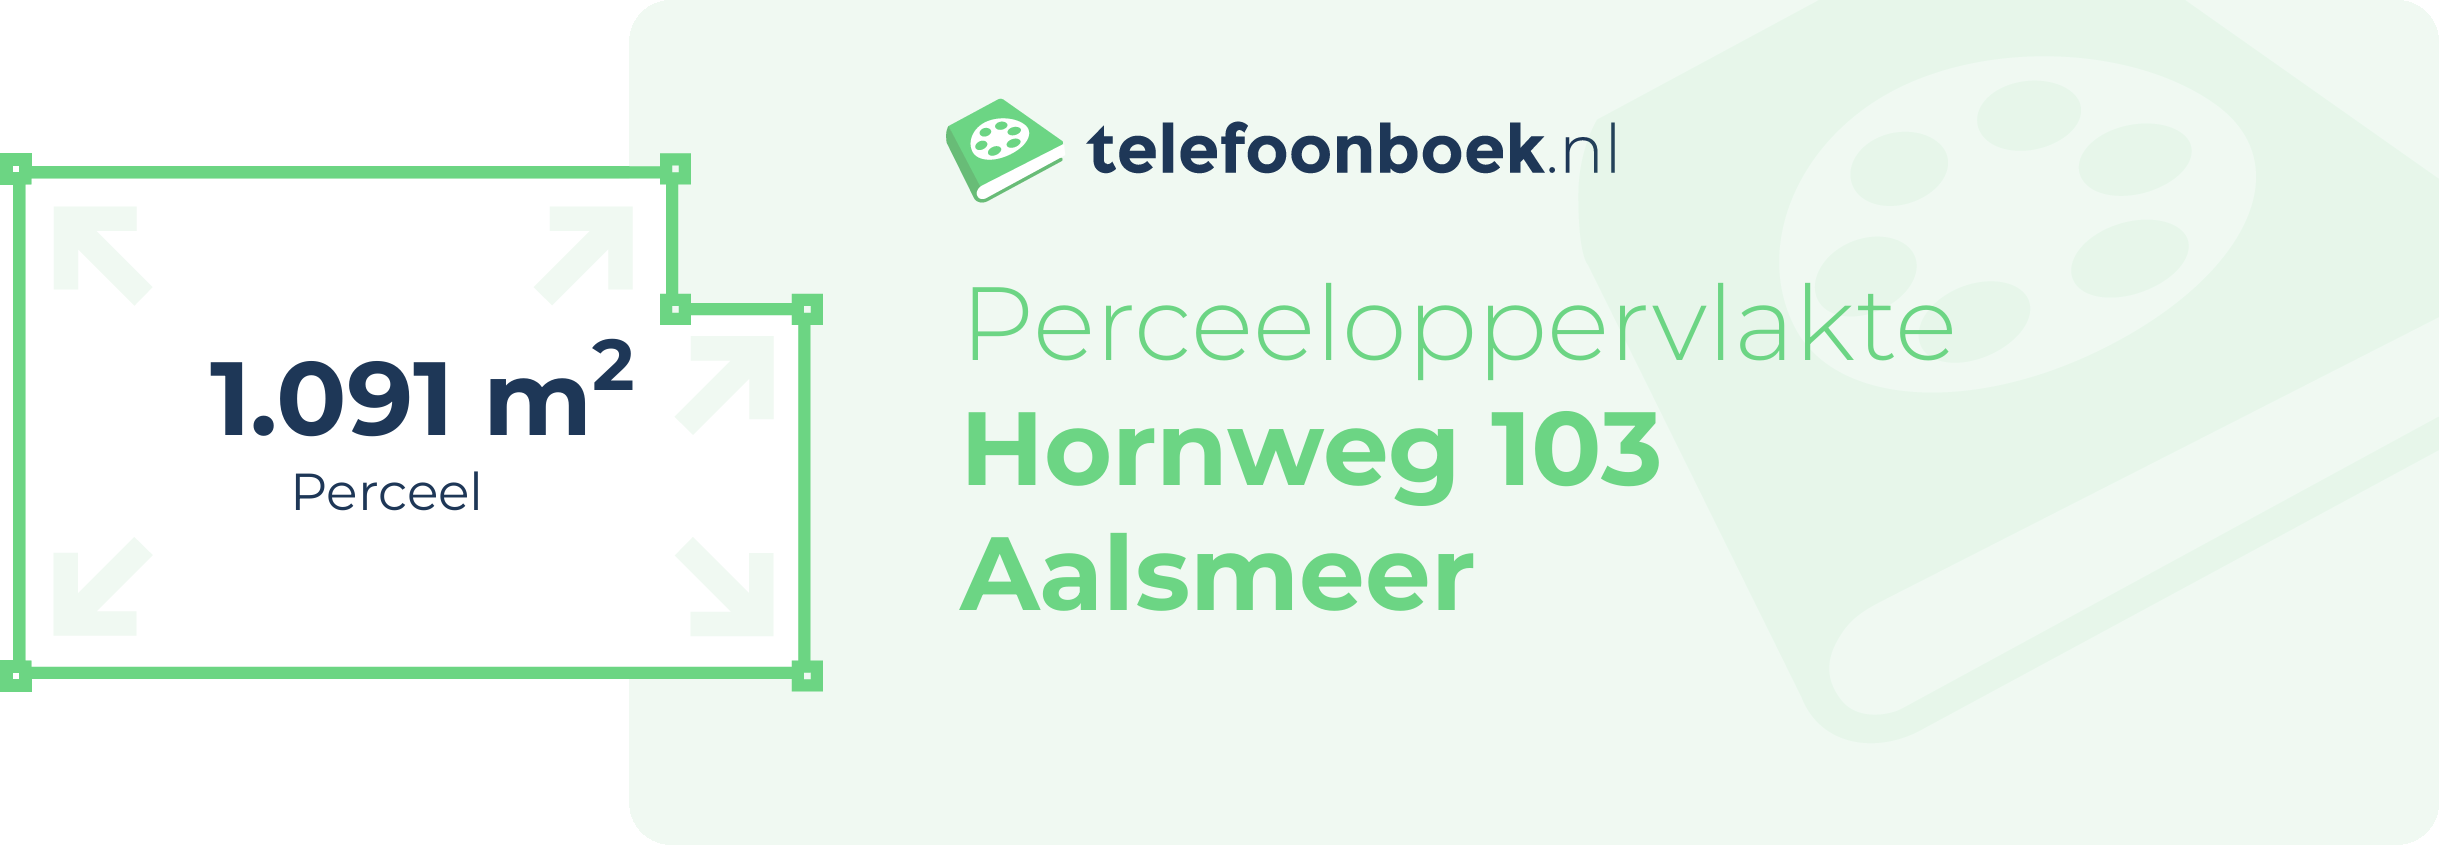 Perceeloppervlakte Hornweg 103 Aalsmeer